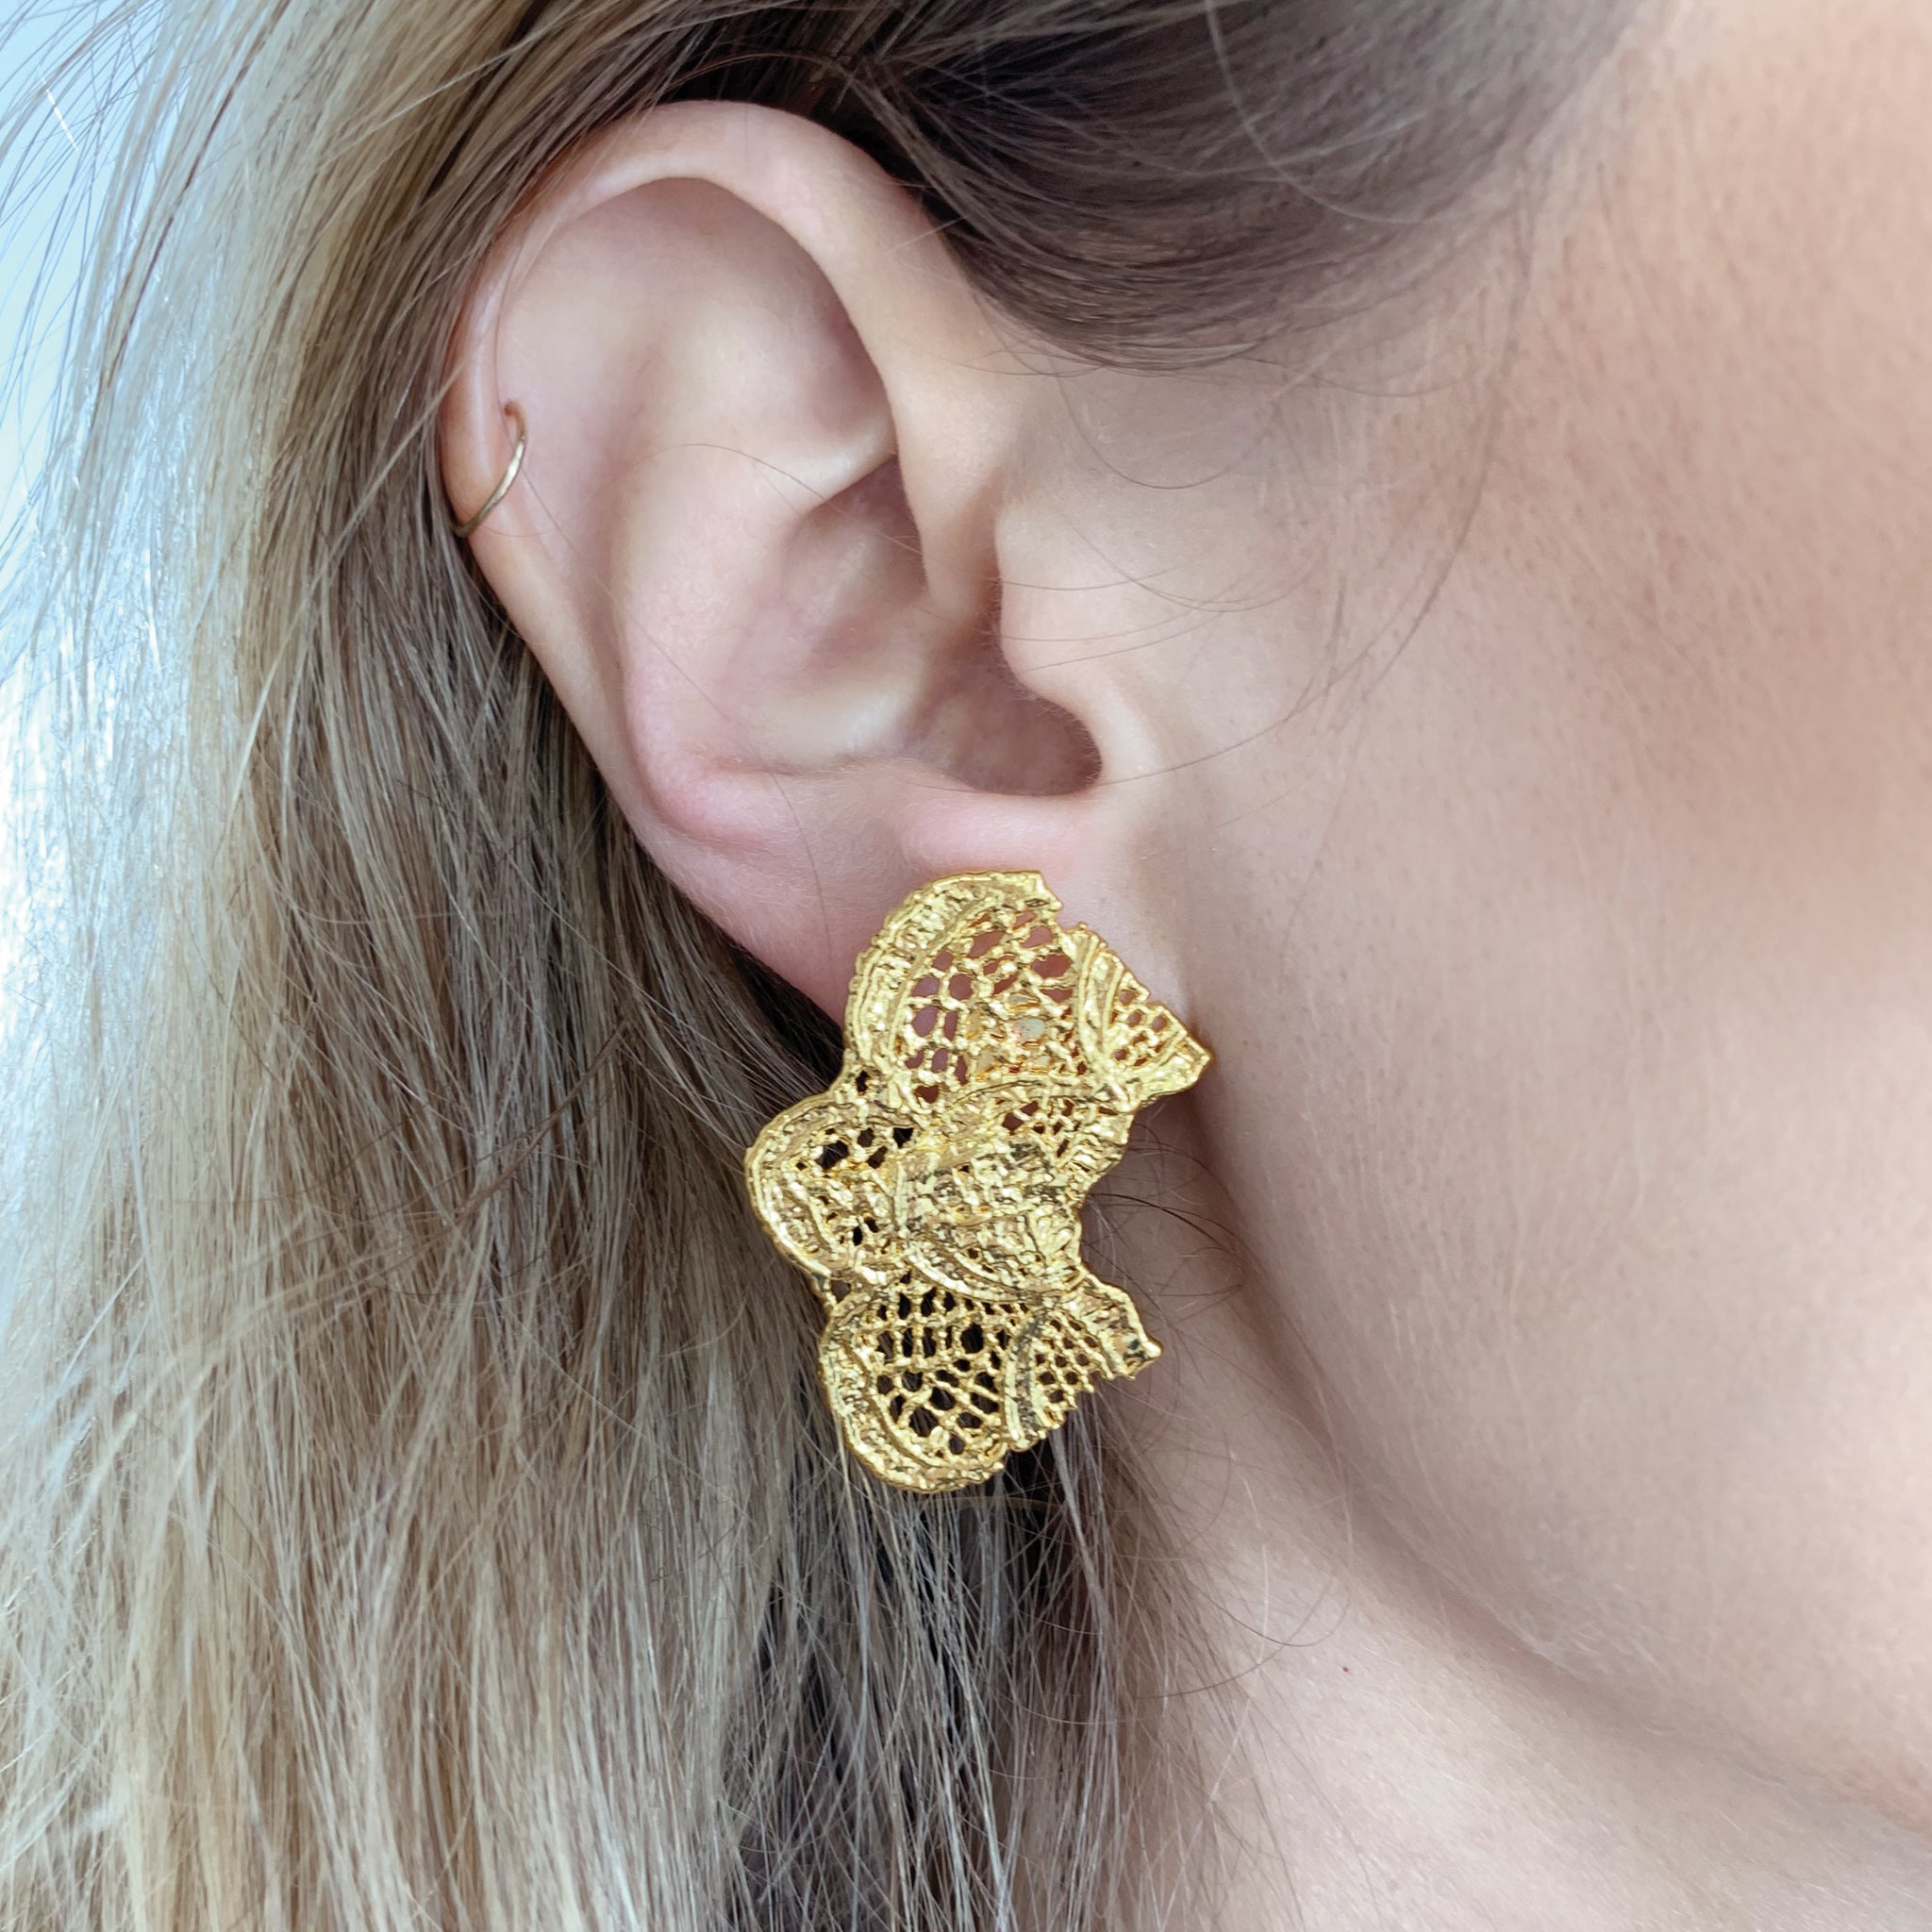 Share 206+ gold earrings new models images best